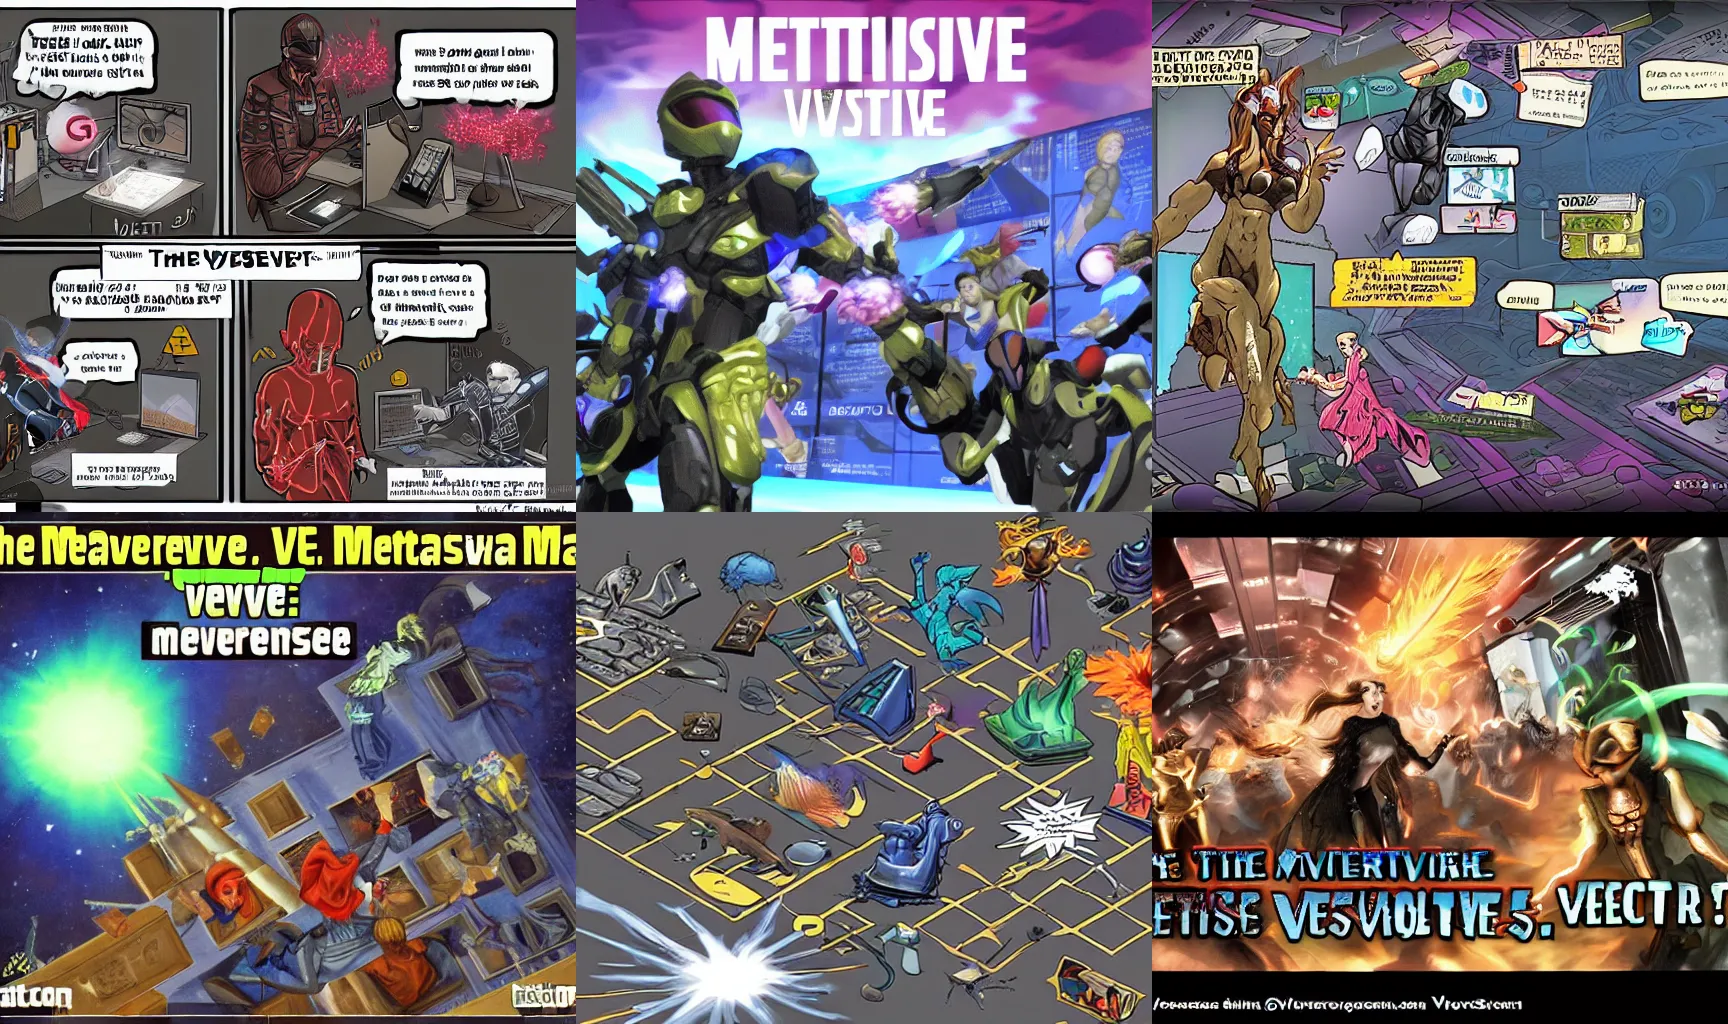 Prompt: The metaverse versus Meta.